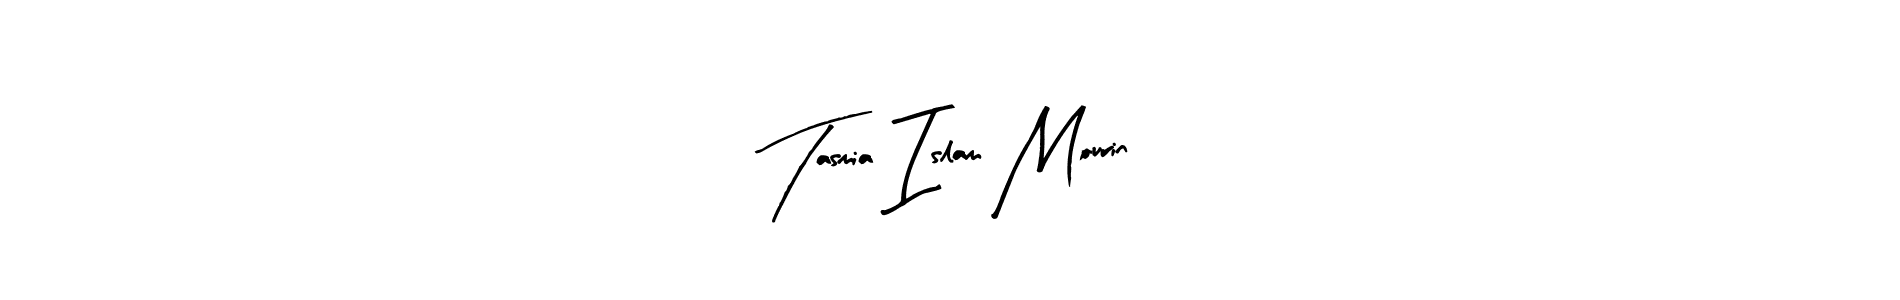 How to Draw Tasmia Islam Mourin signature style? Arty Signature is a latest design signature styles for name Tasmia Islam Mourin. Tasmia Islam Mourin signature style 8 images and pictures png